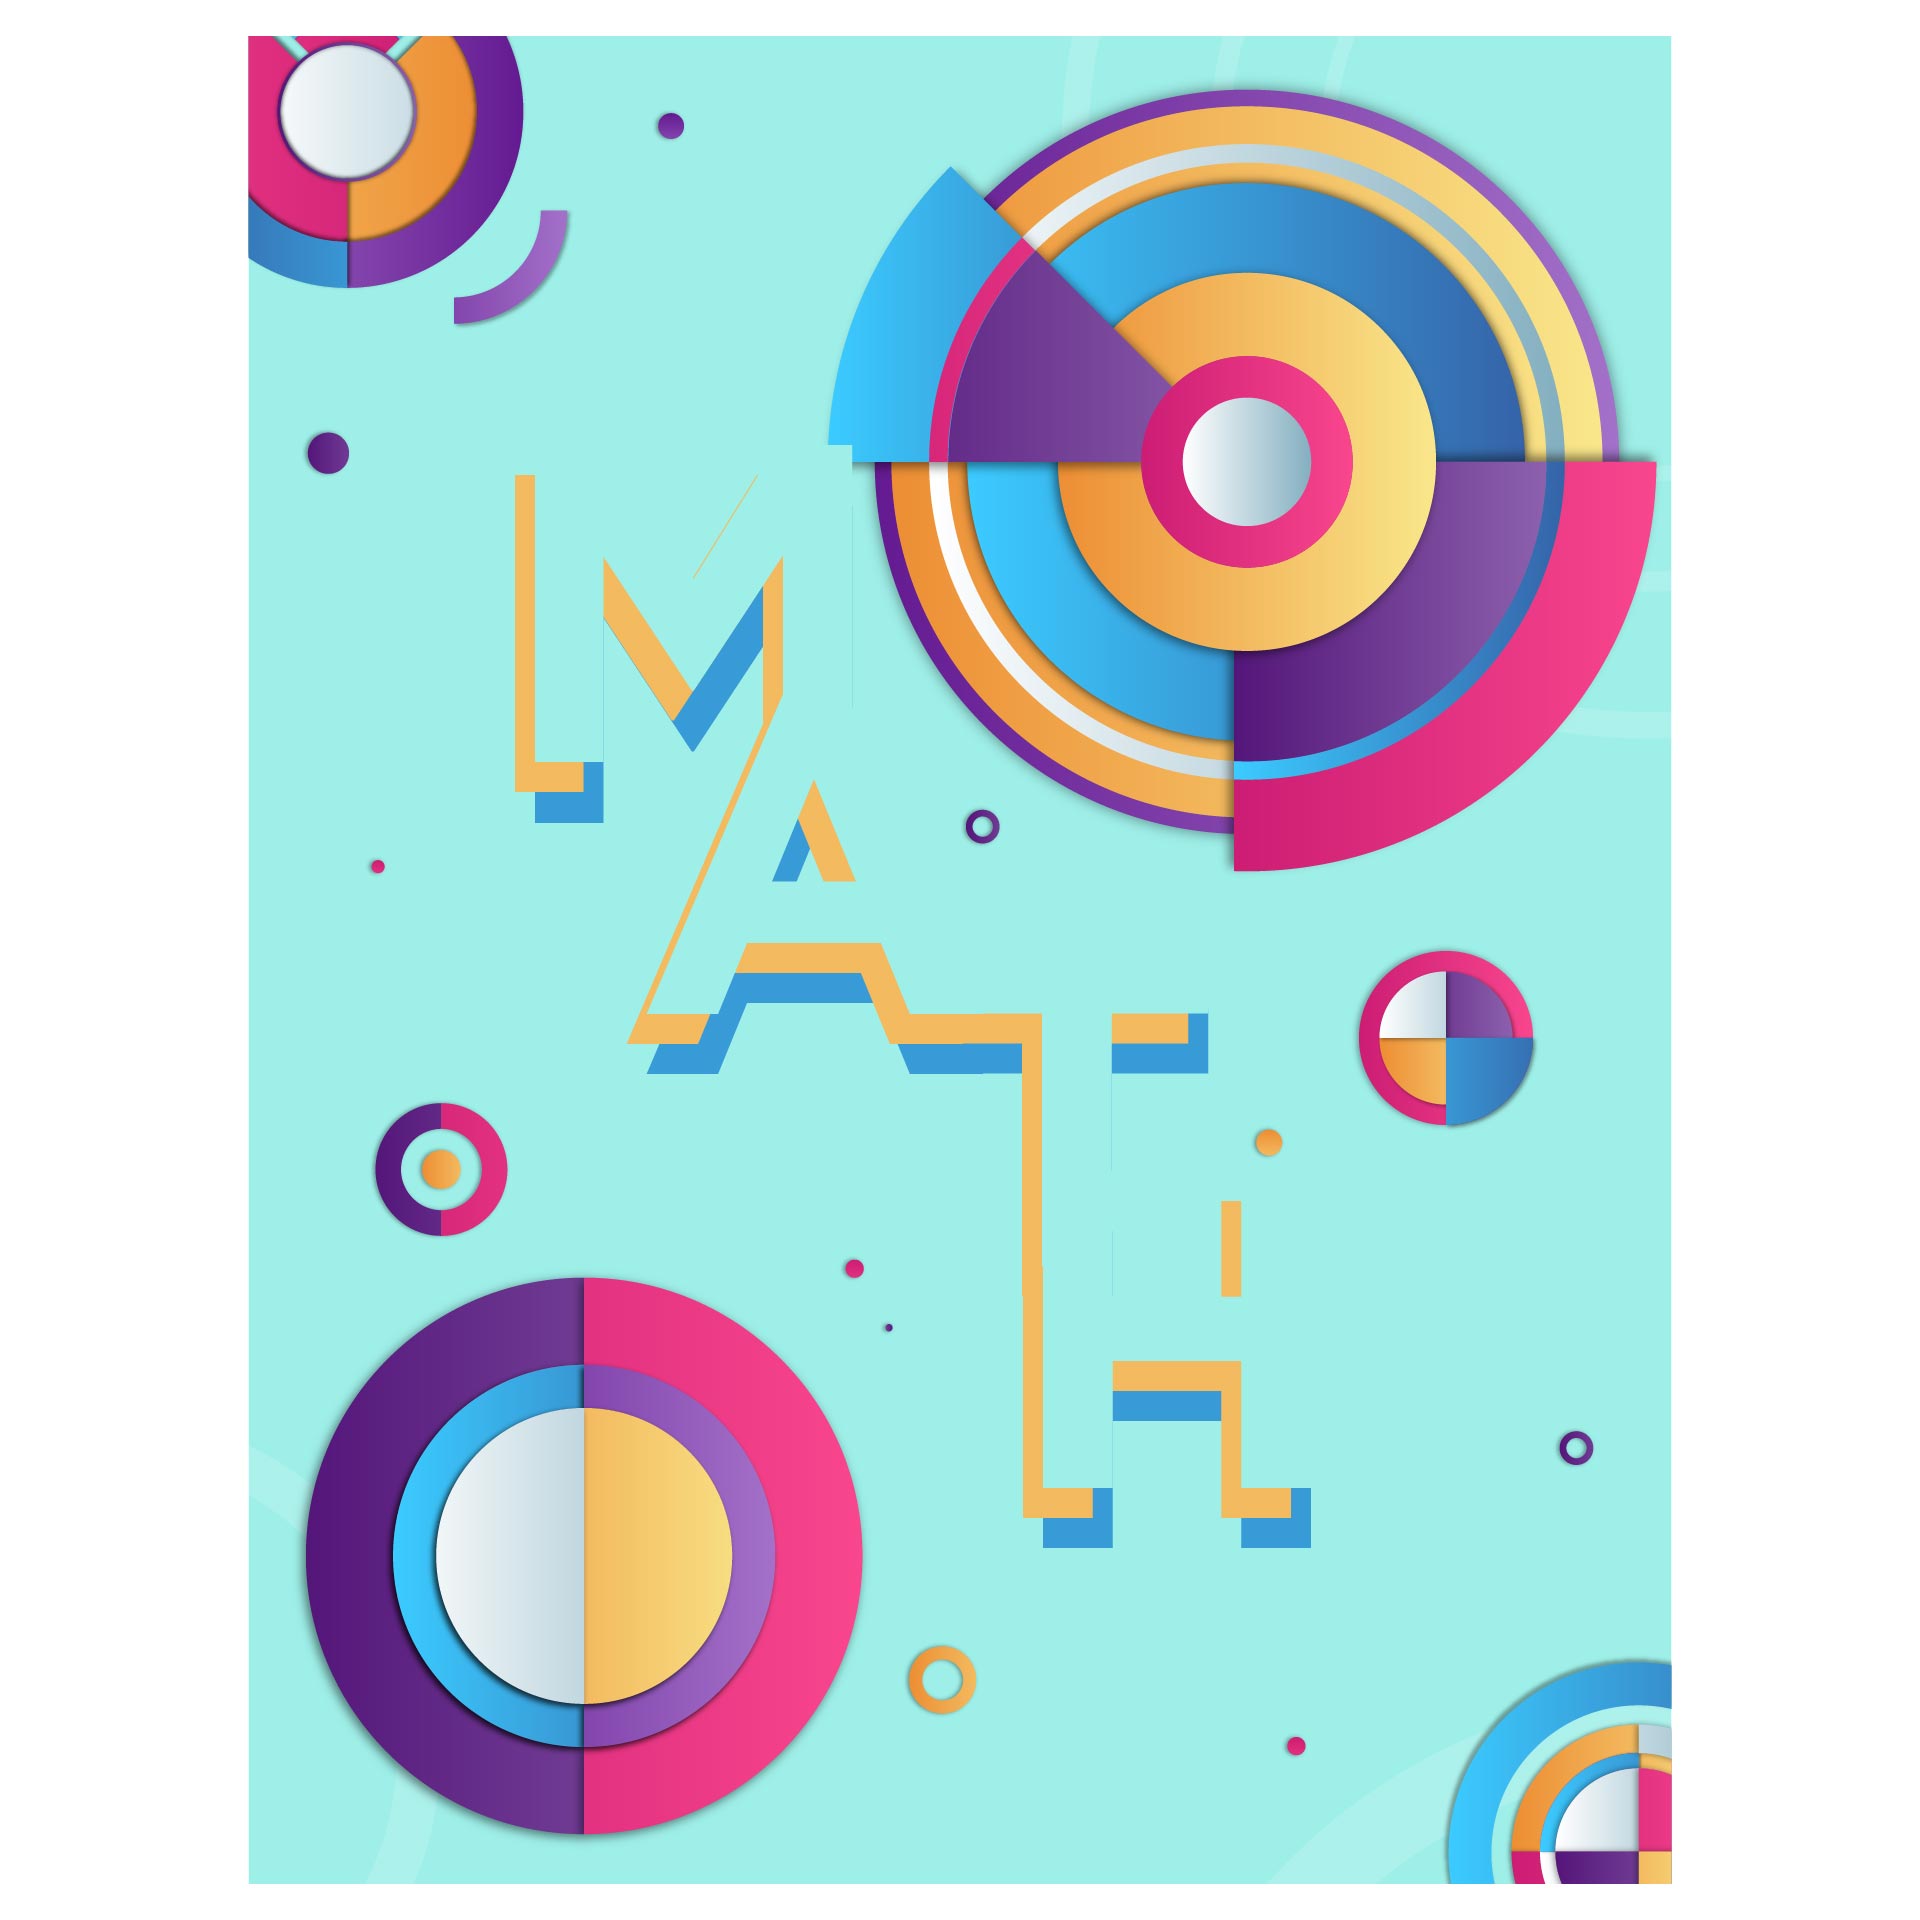 math binder cover polyvore